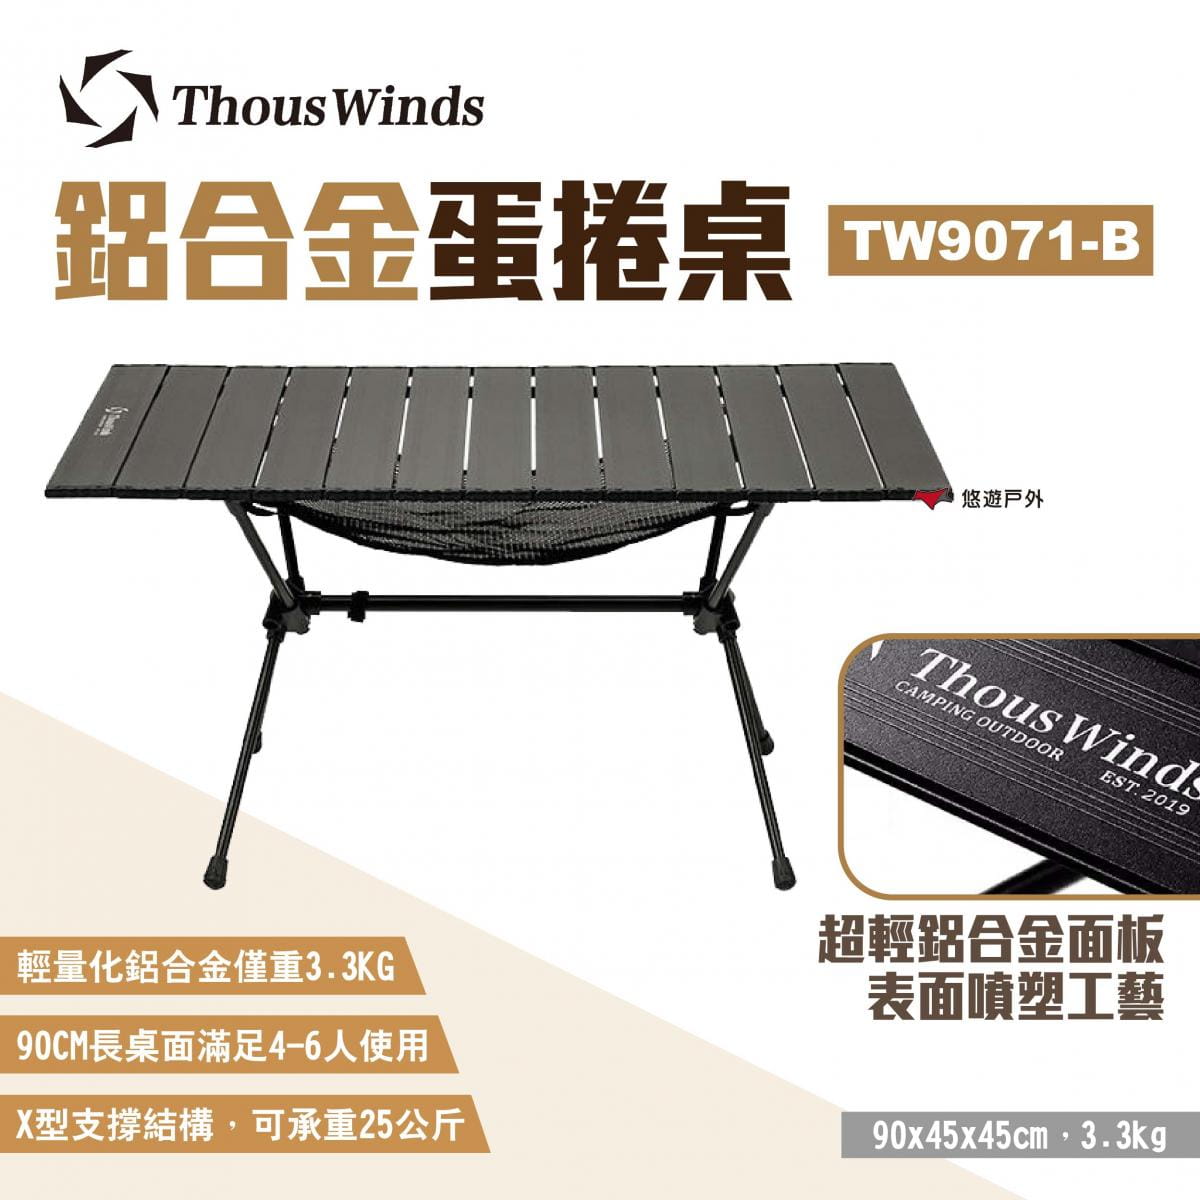 【Thous Winds】鋁合金蛋捲桌 TW9071-B 悠遊戶外 1